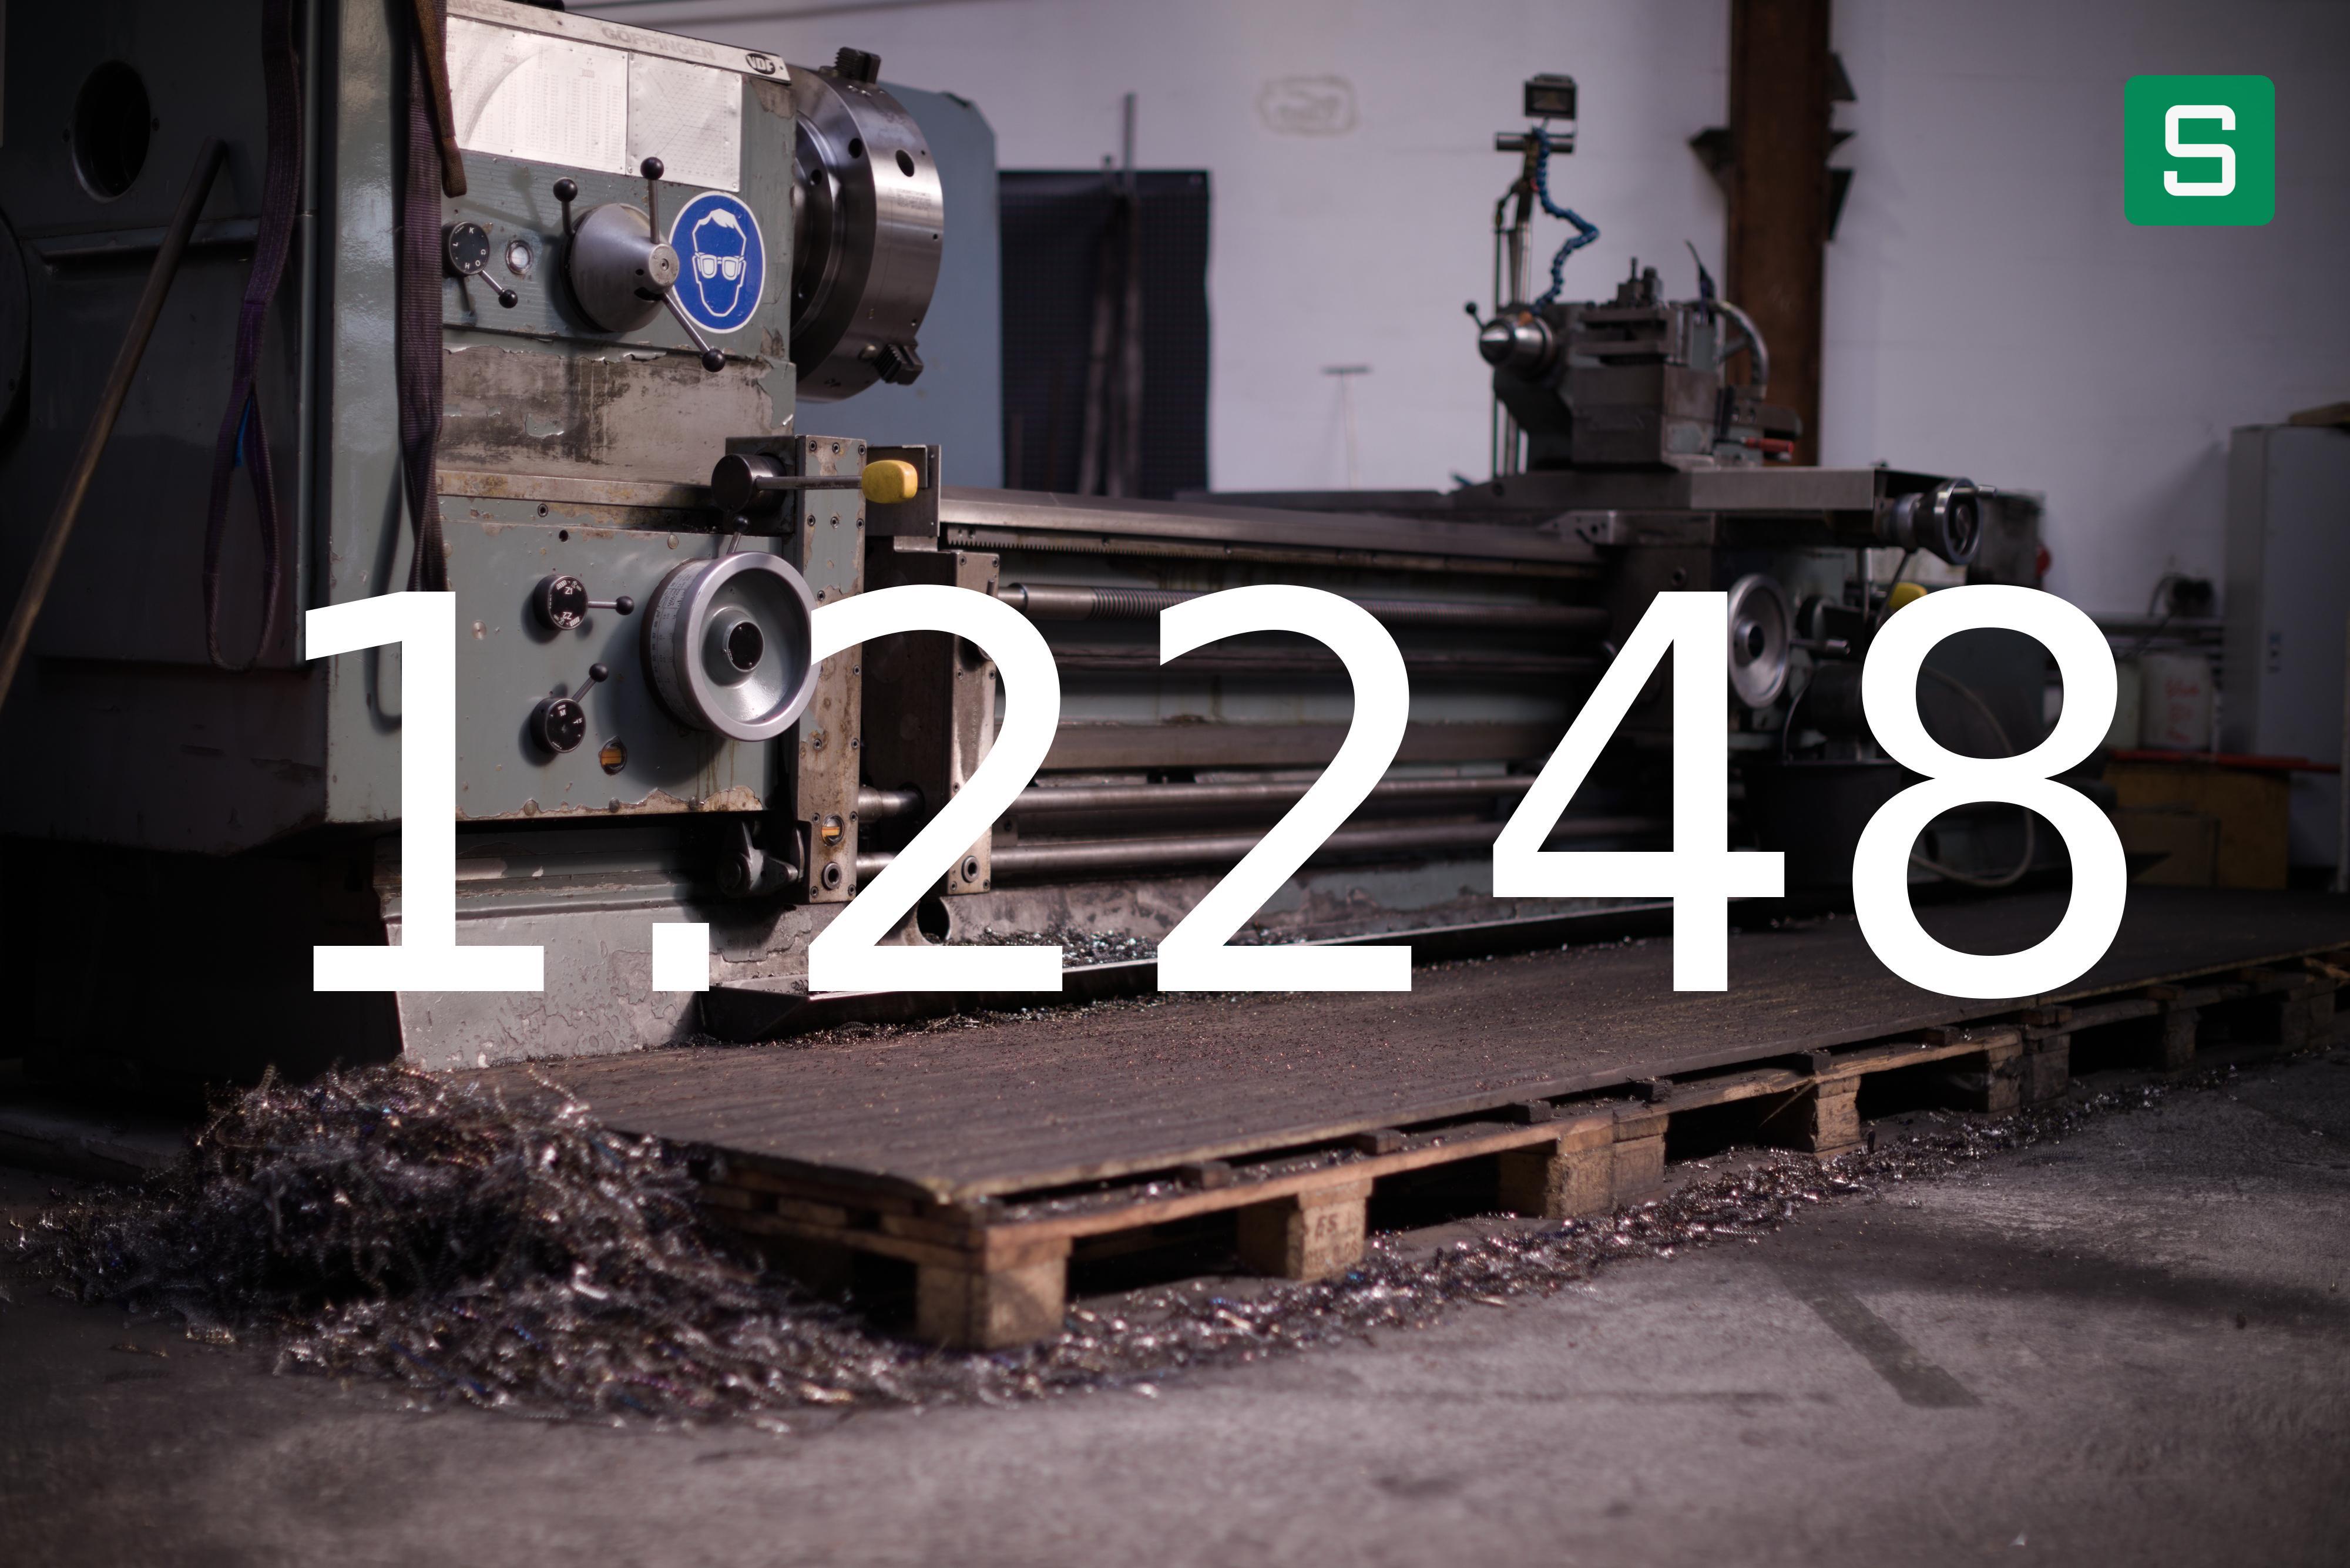 Steel Material: 1.2248